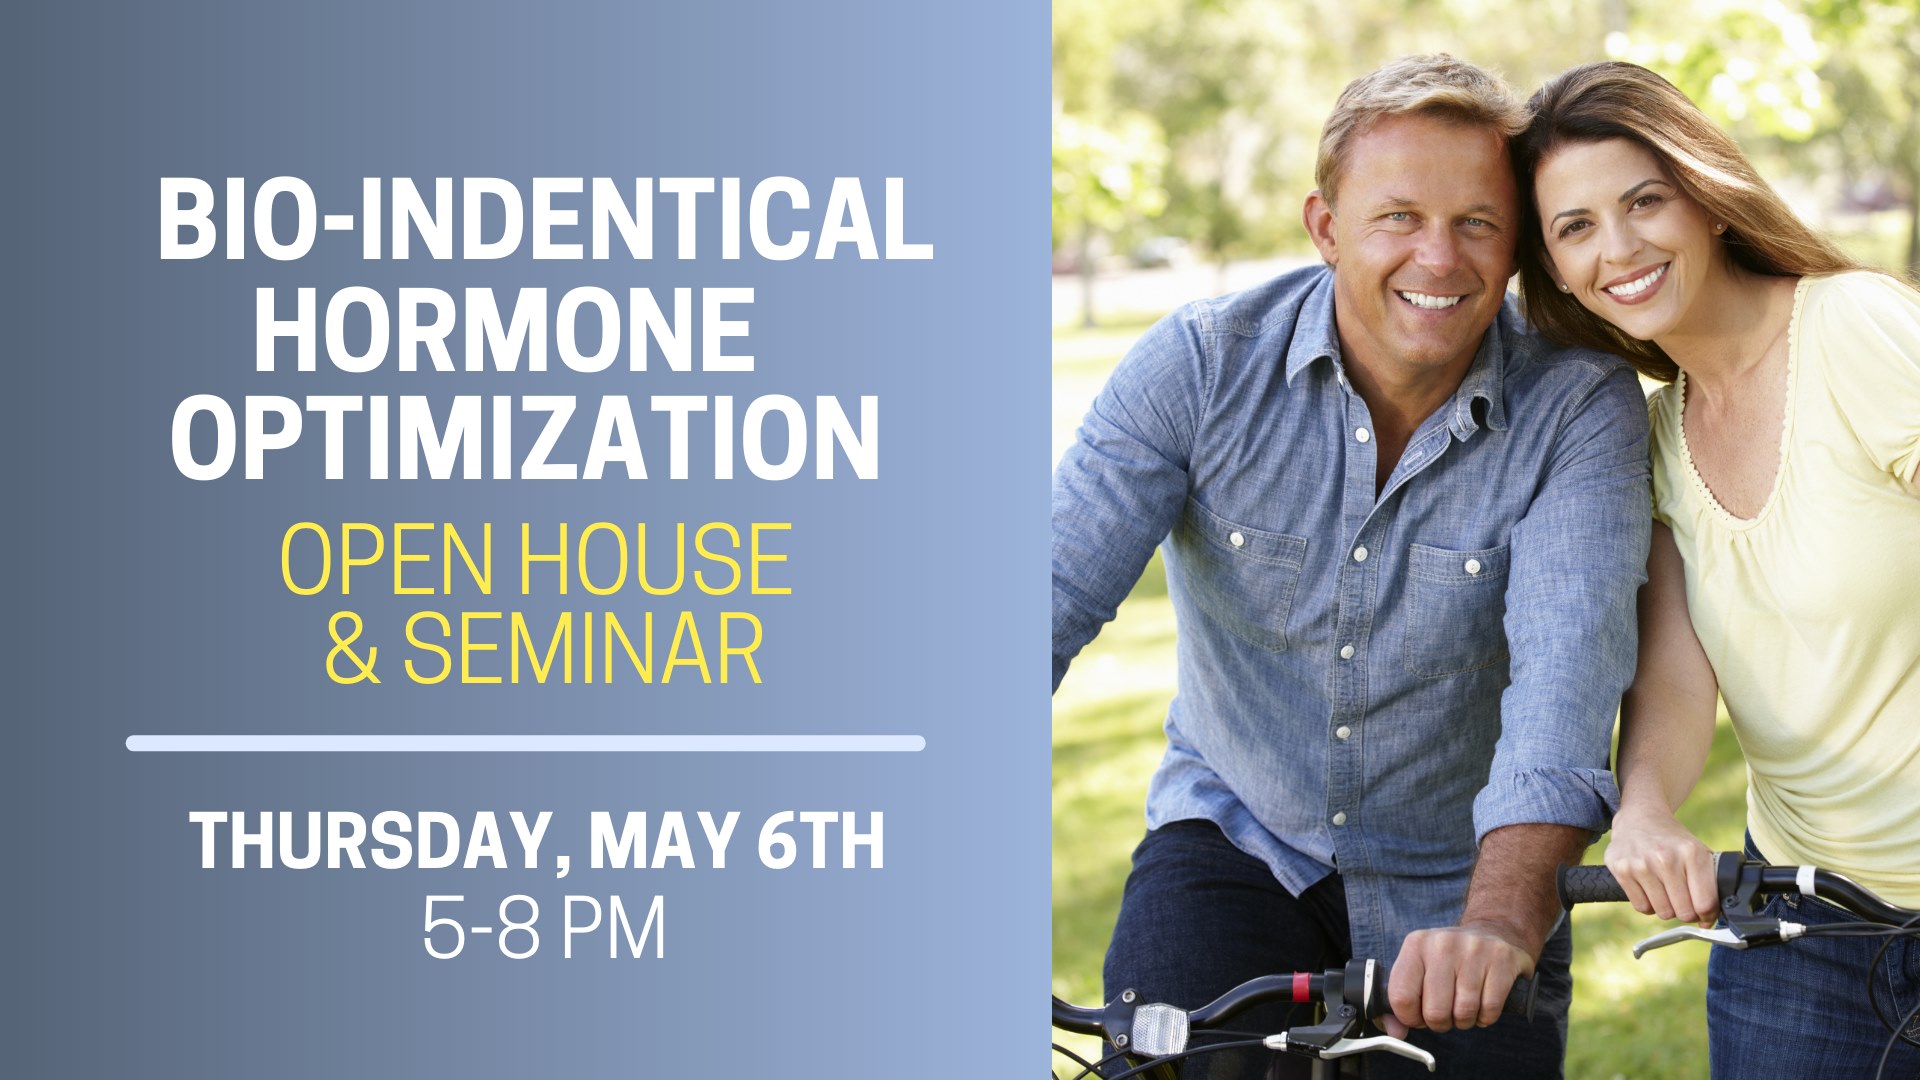 Bioidentical Hormone Pellet Therapy Seminar & Open House, Bradenton, FL 34203,Florida,United States